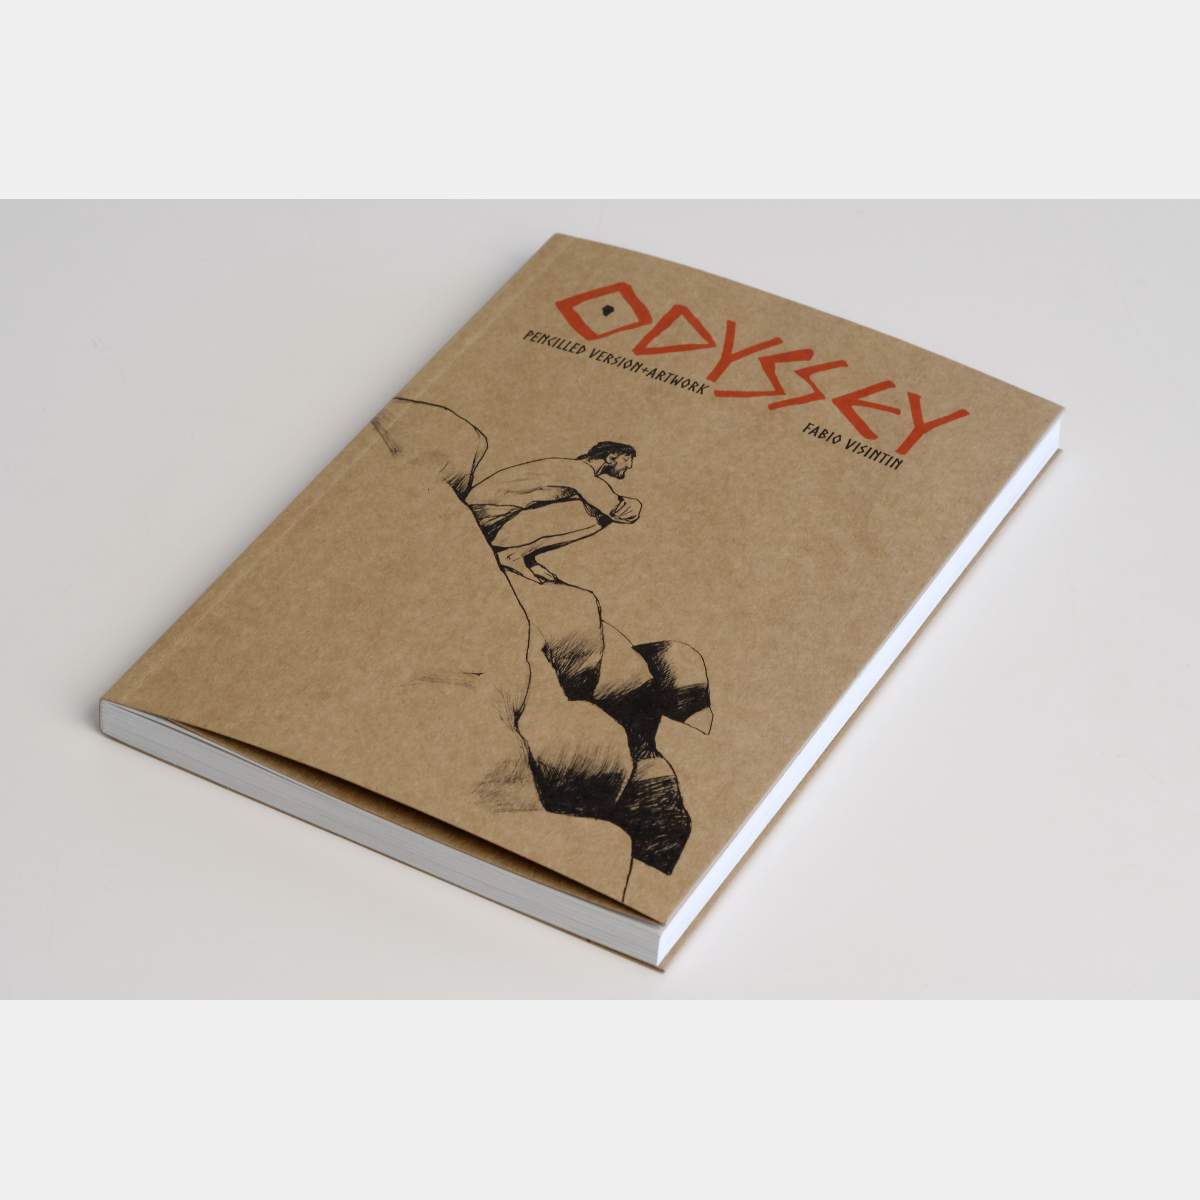 Fabio Visintin - Odyssey - Pencilled version + artbook